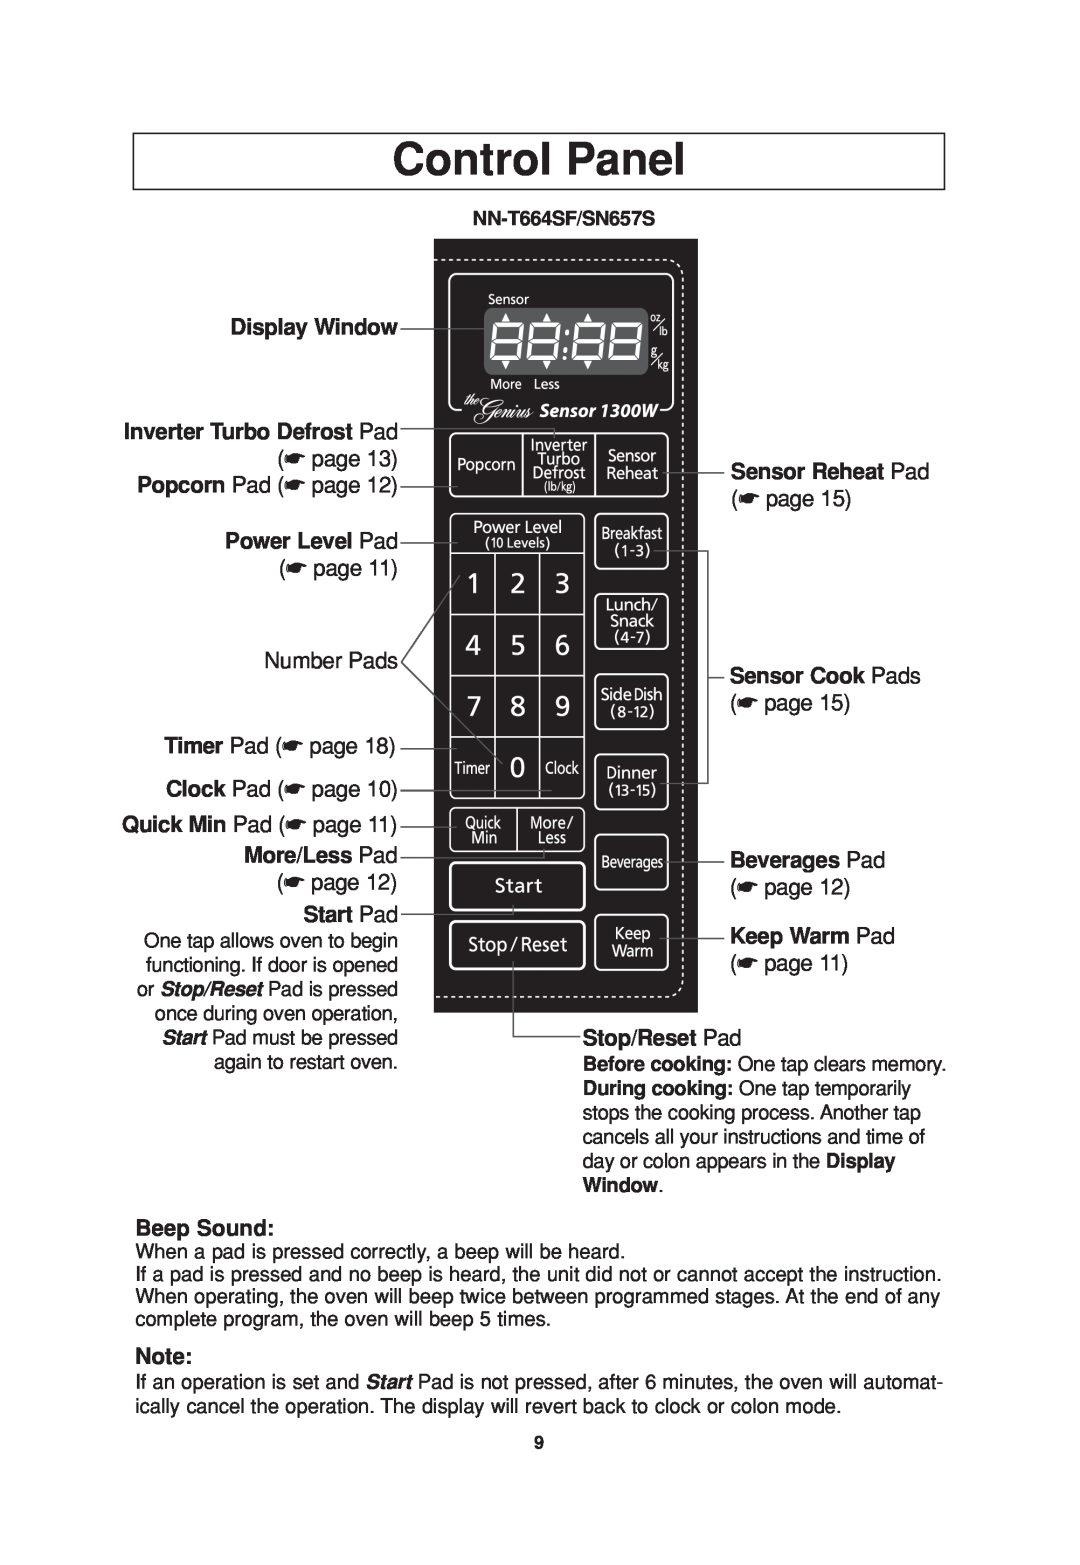 Panasonic NN-T664SF operating instructions Control Panel 